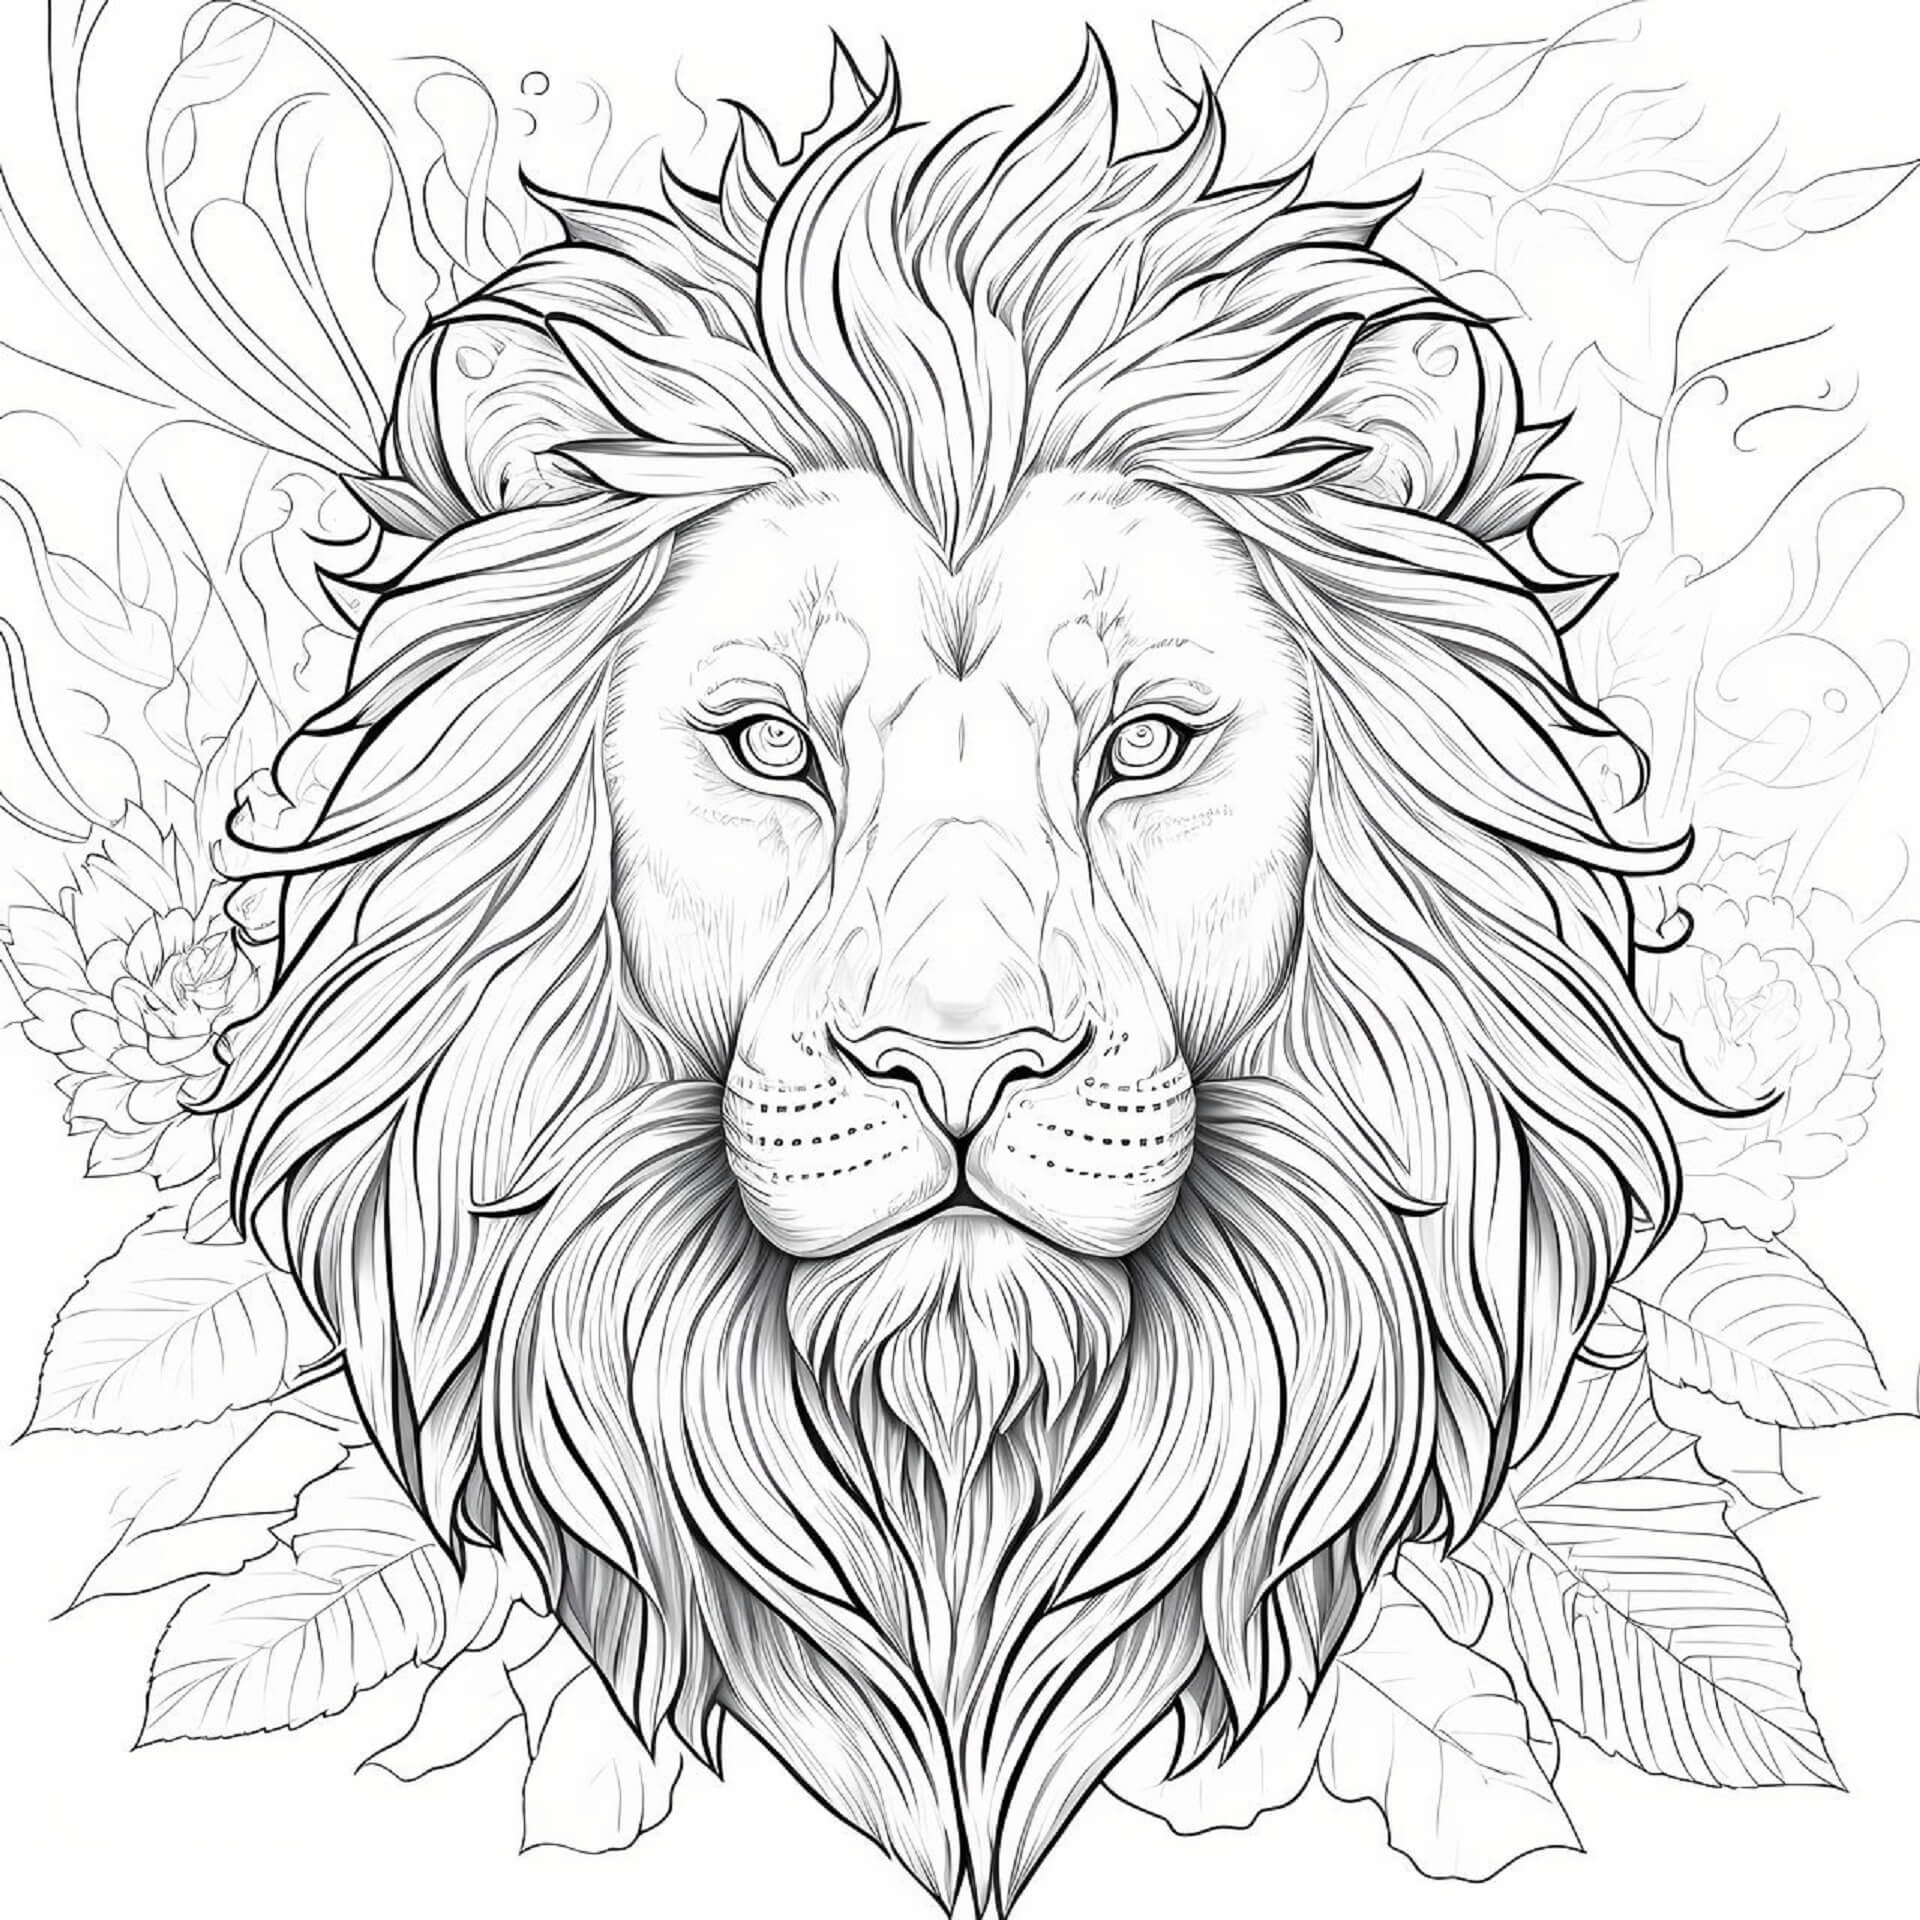 Mandala Lion With Leaves Coloring Page Mandalas